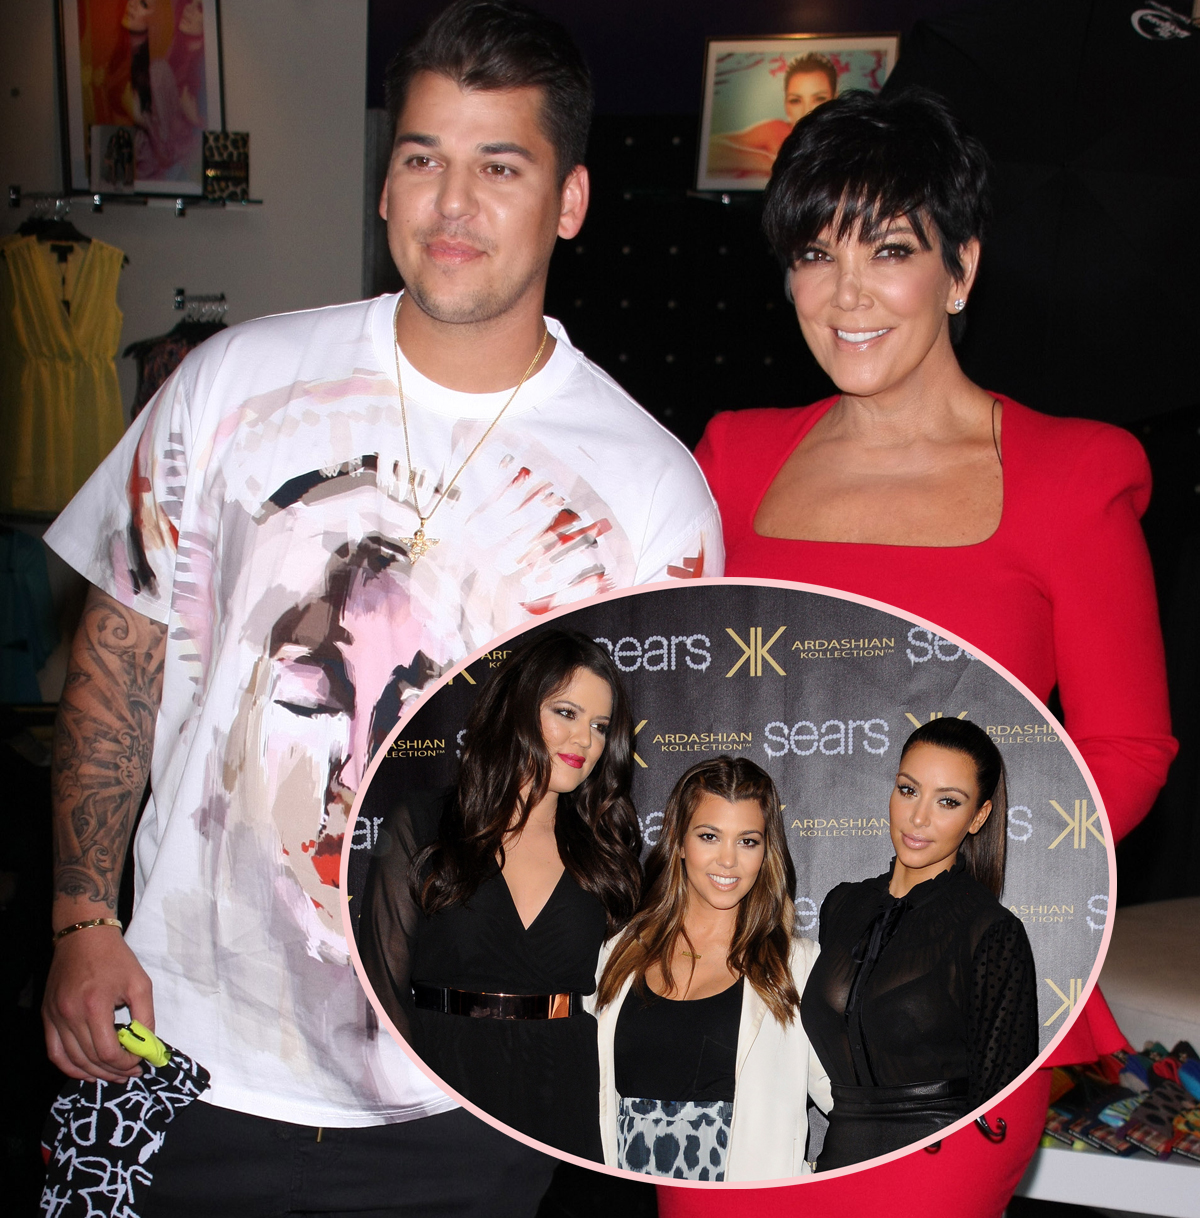 Rob Kardashian returns to social media to celebrate sister Khloé's birthday